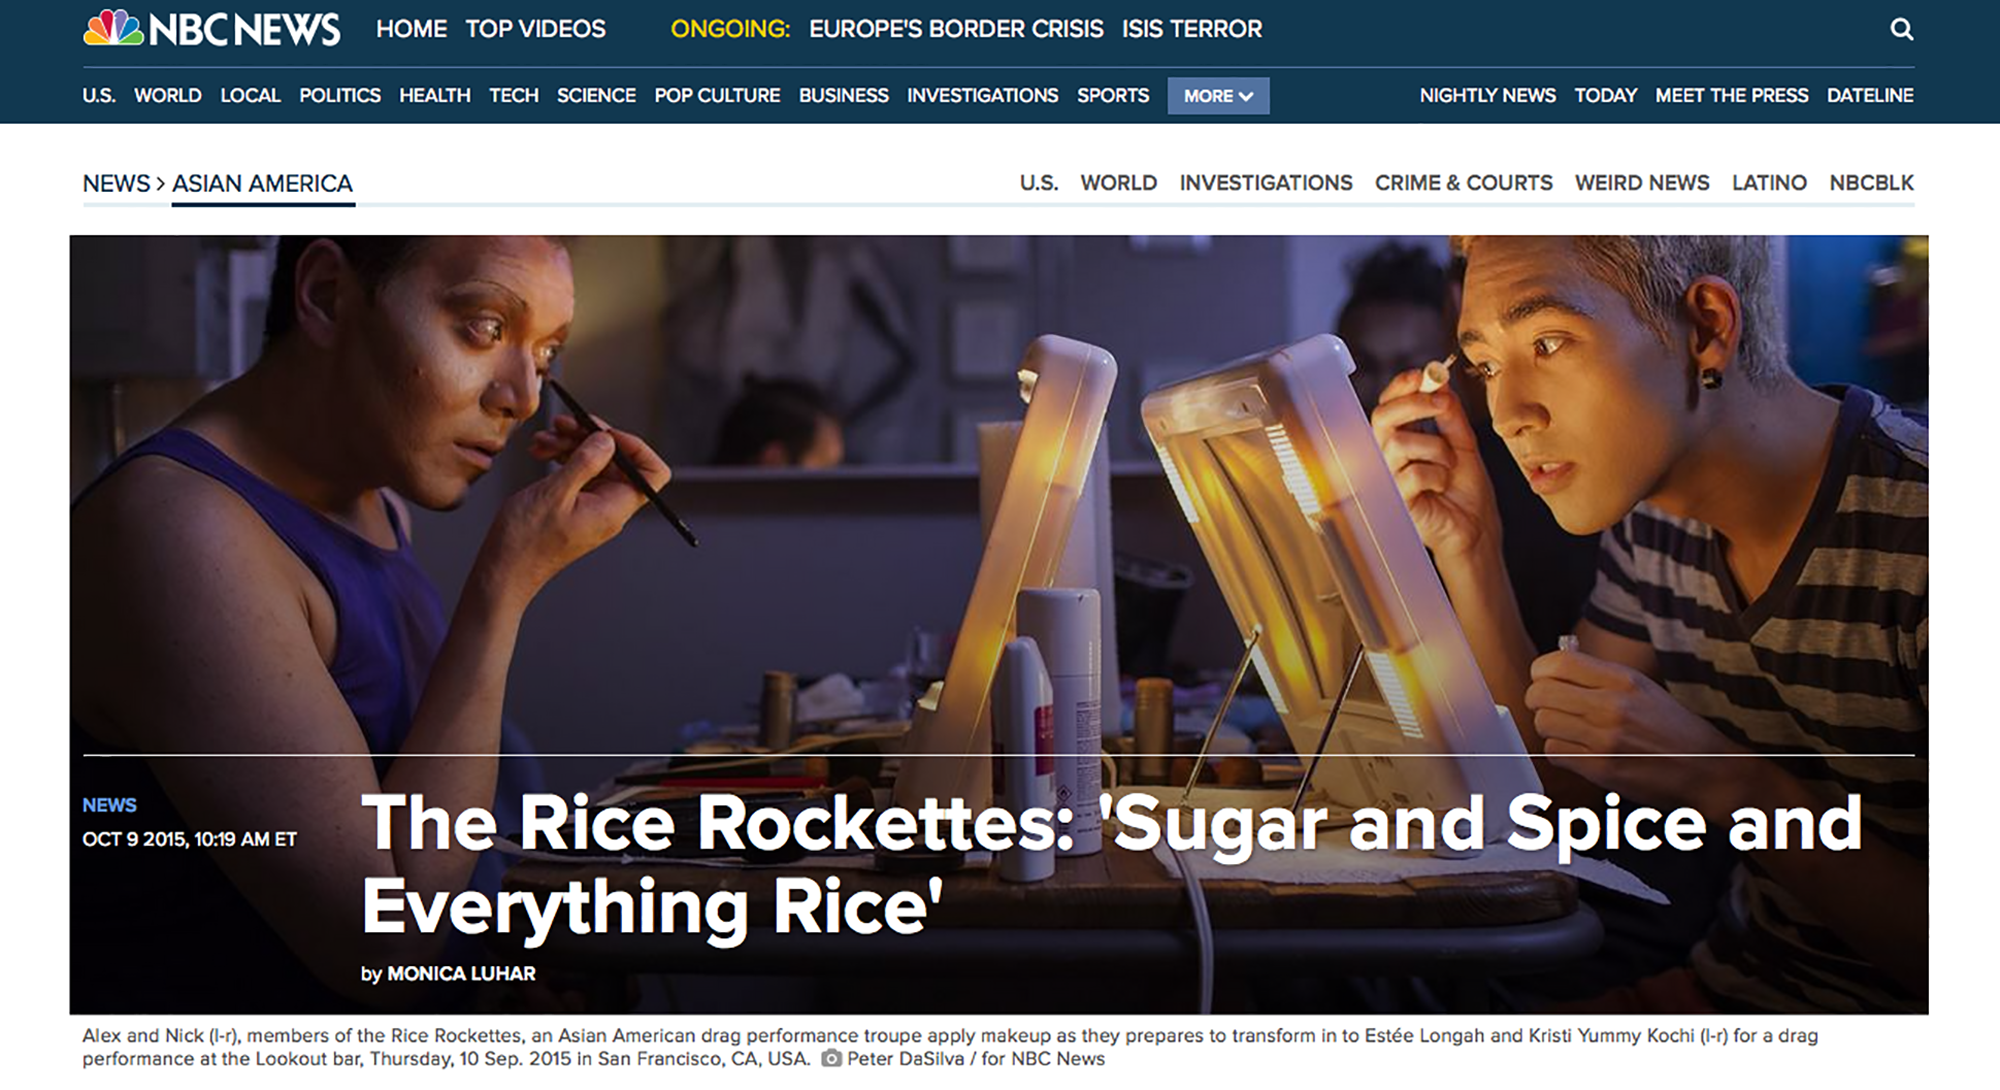    NBC News - Rice Rockettes   